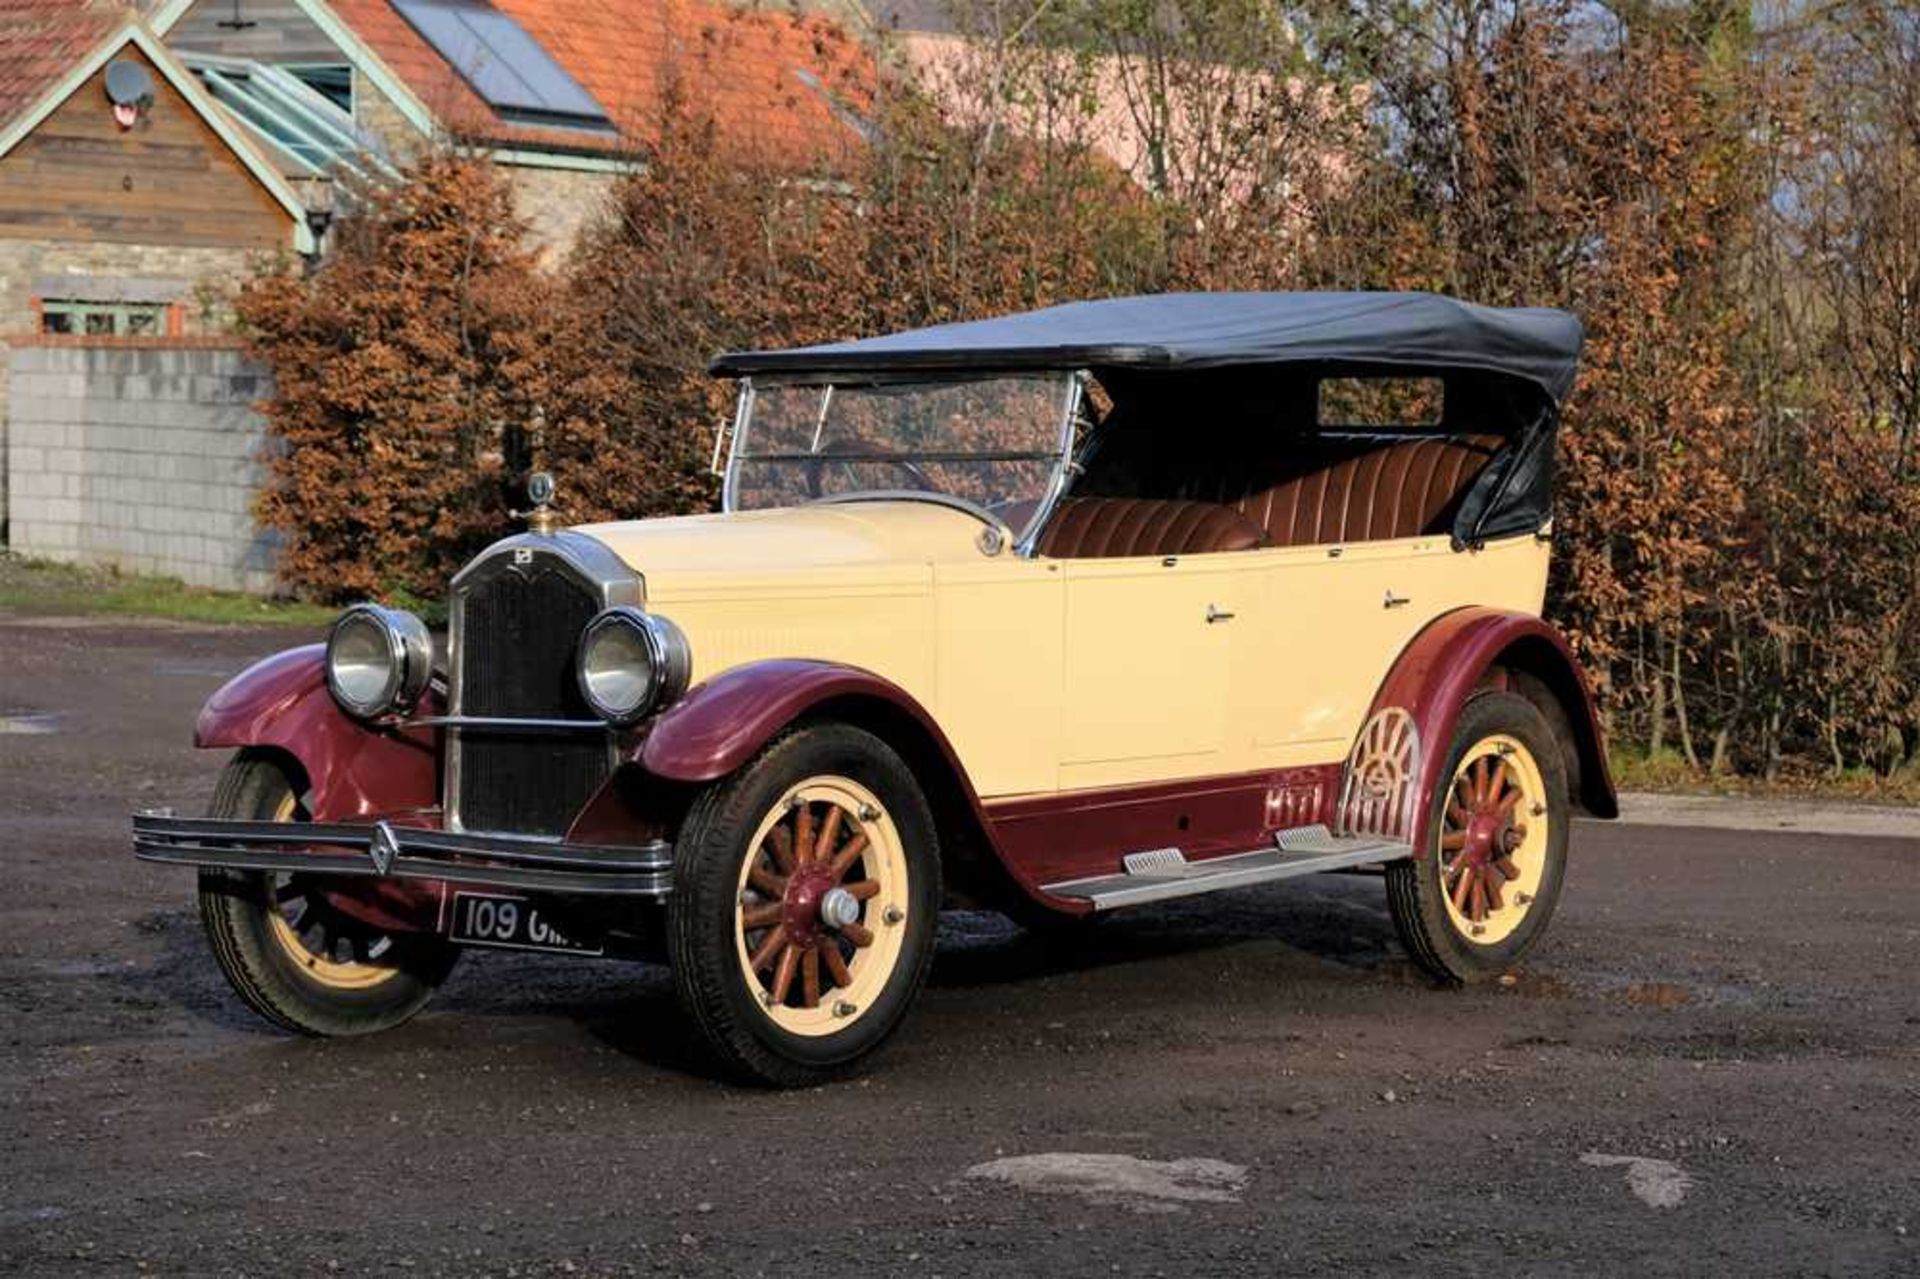 1926 Buick Standard Six Tourer - Image 2 of 58